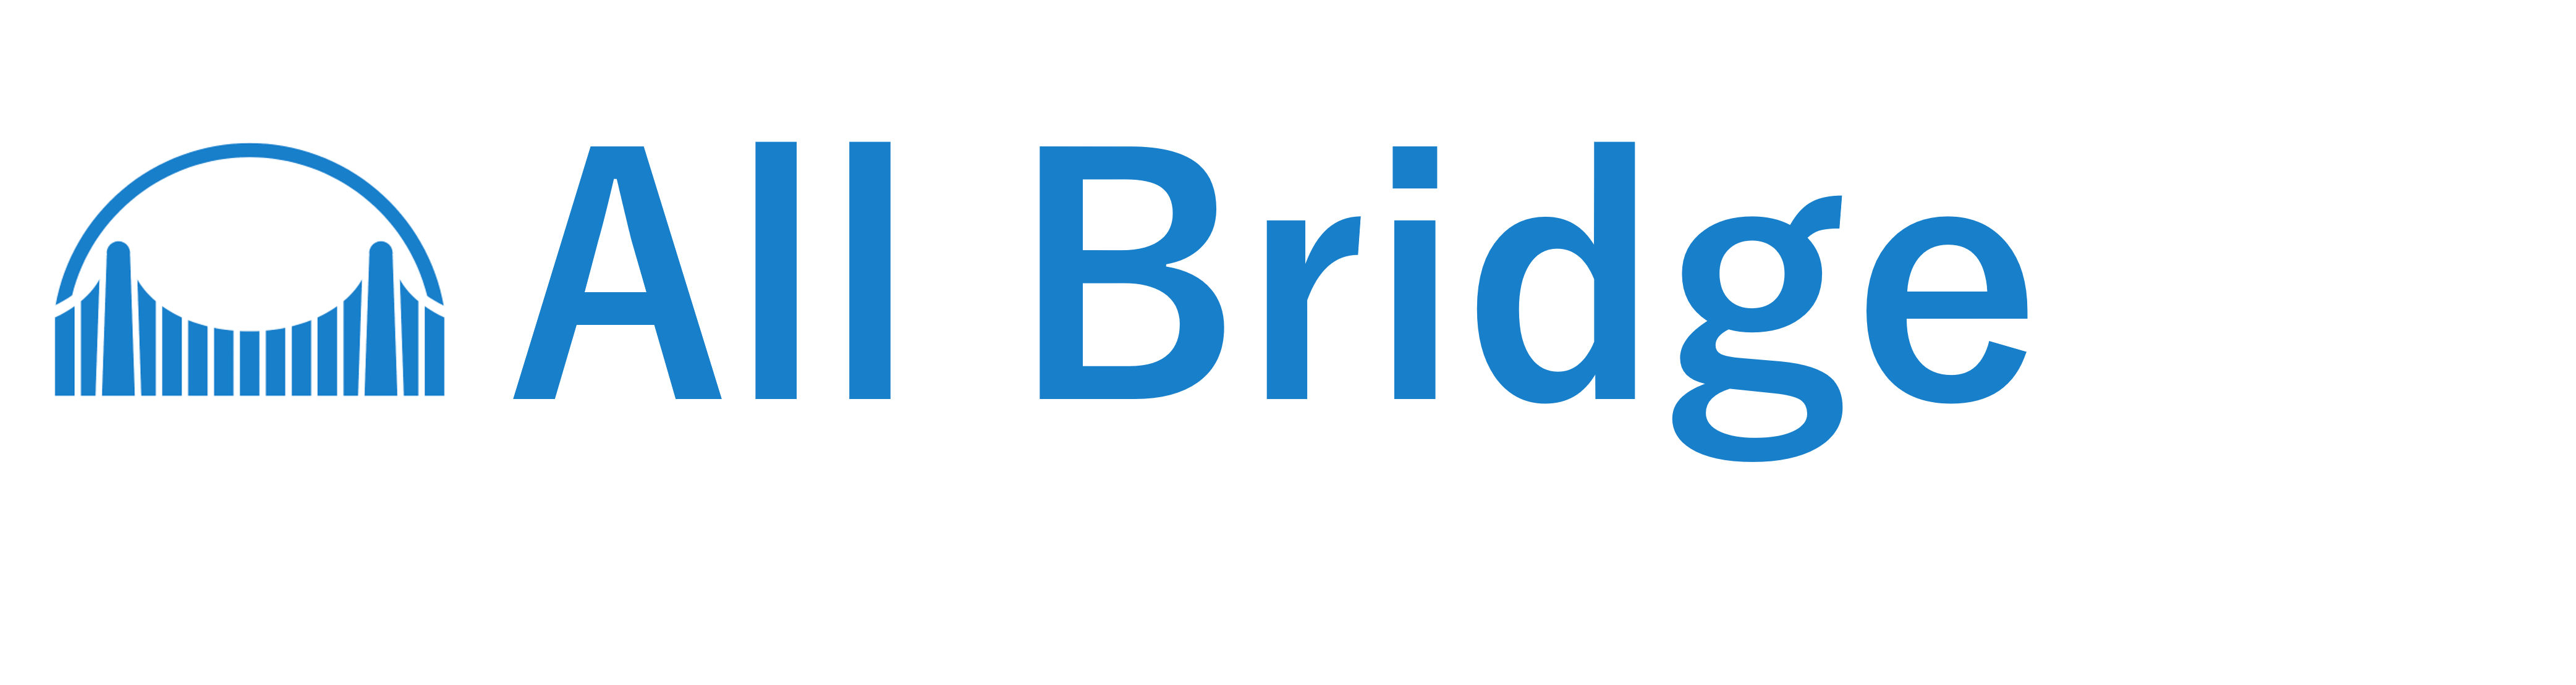 All Bridge株式会社